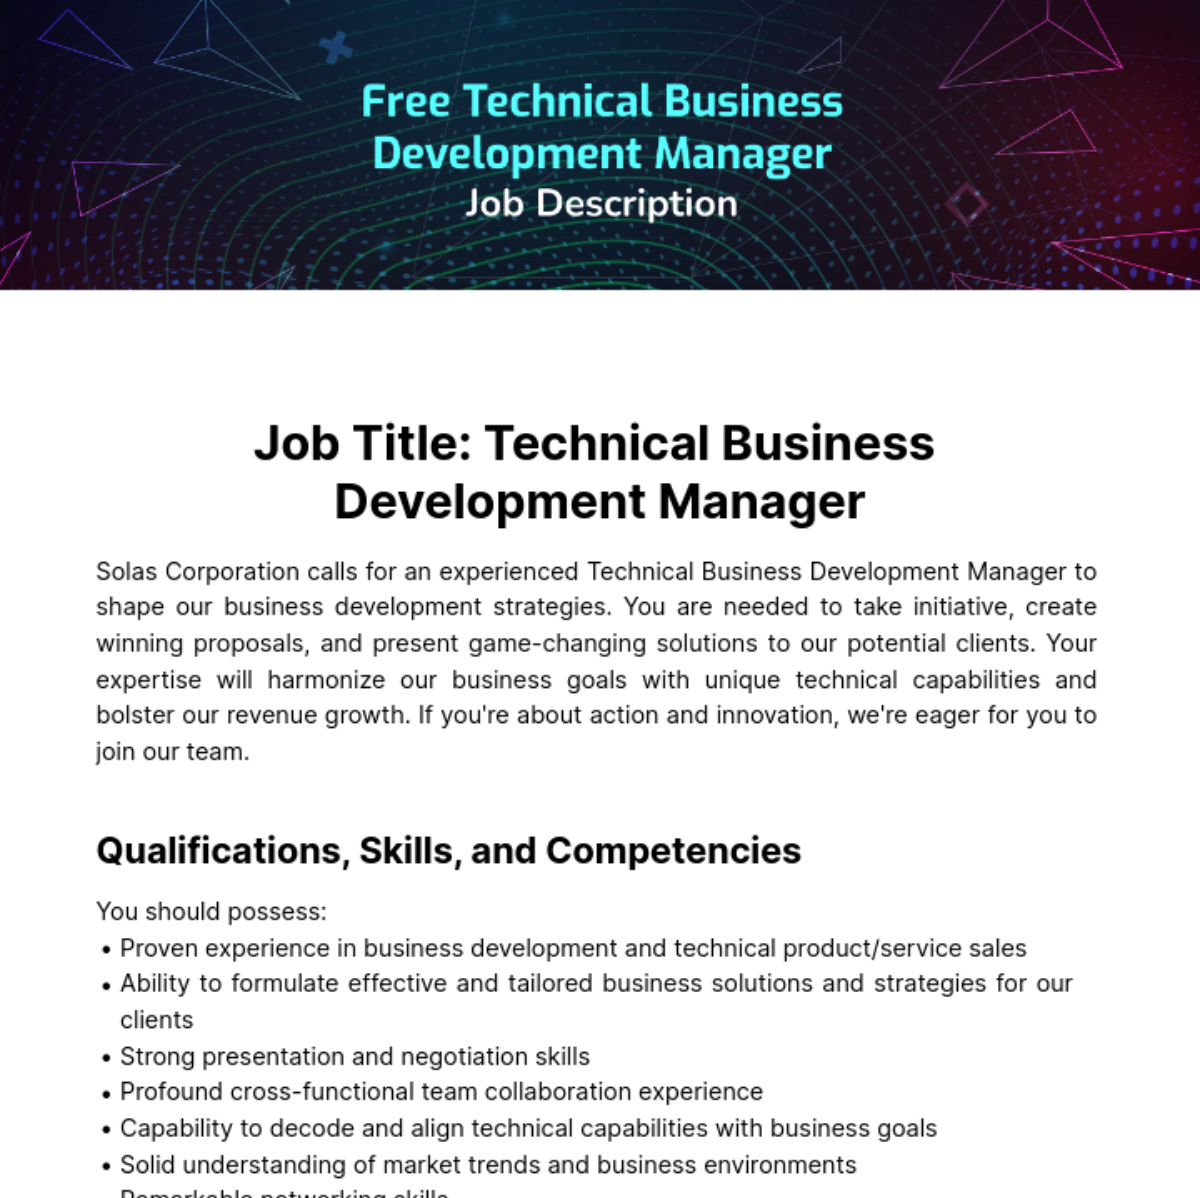 Technical Business Development Manager Job Description Template